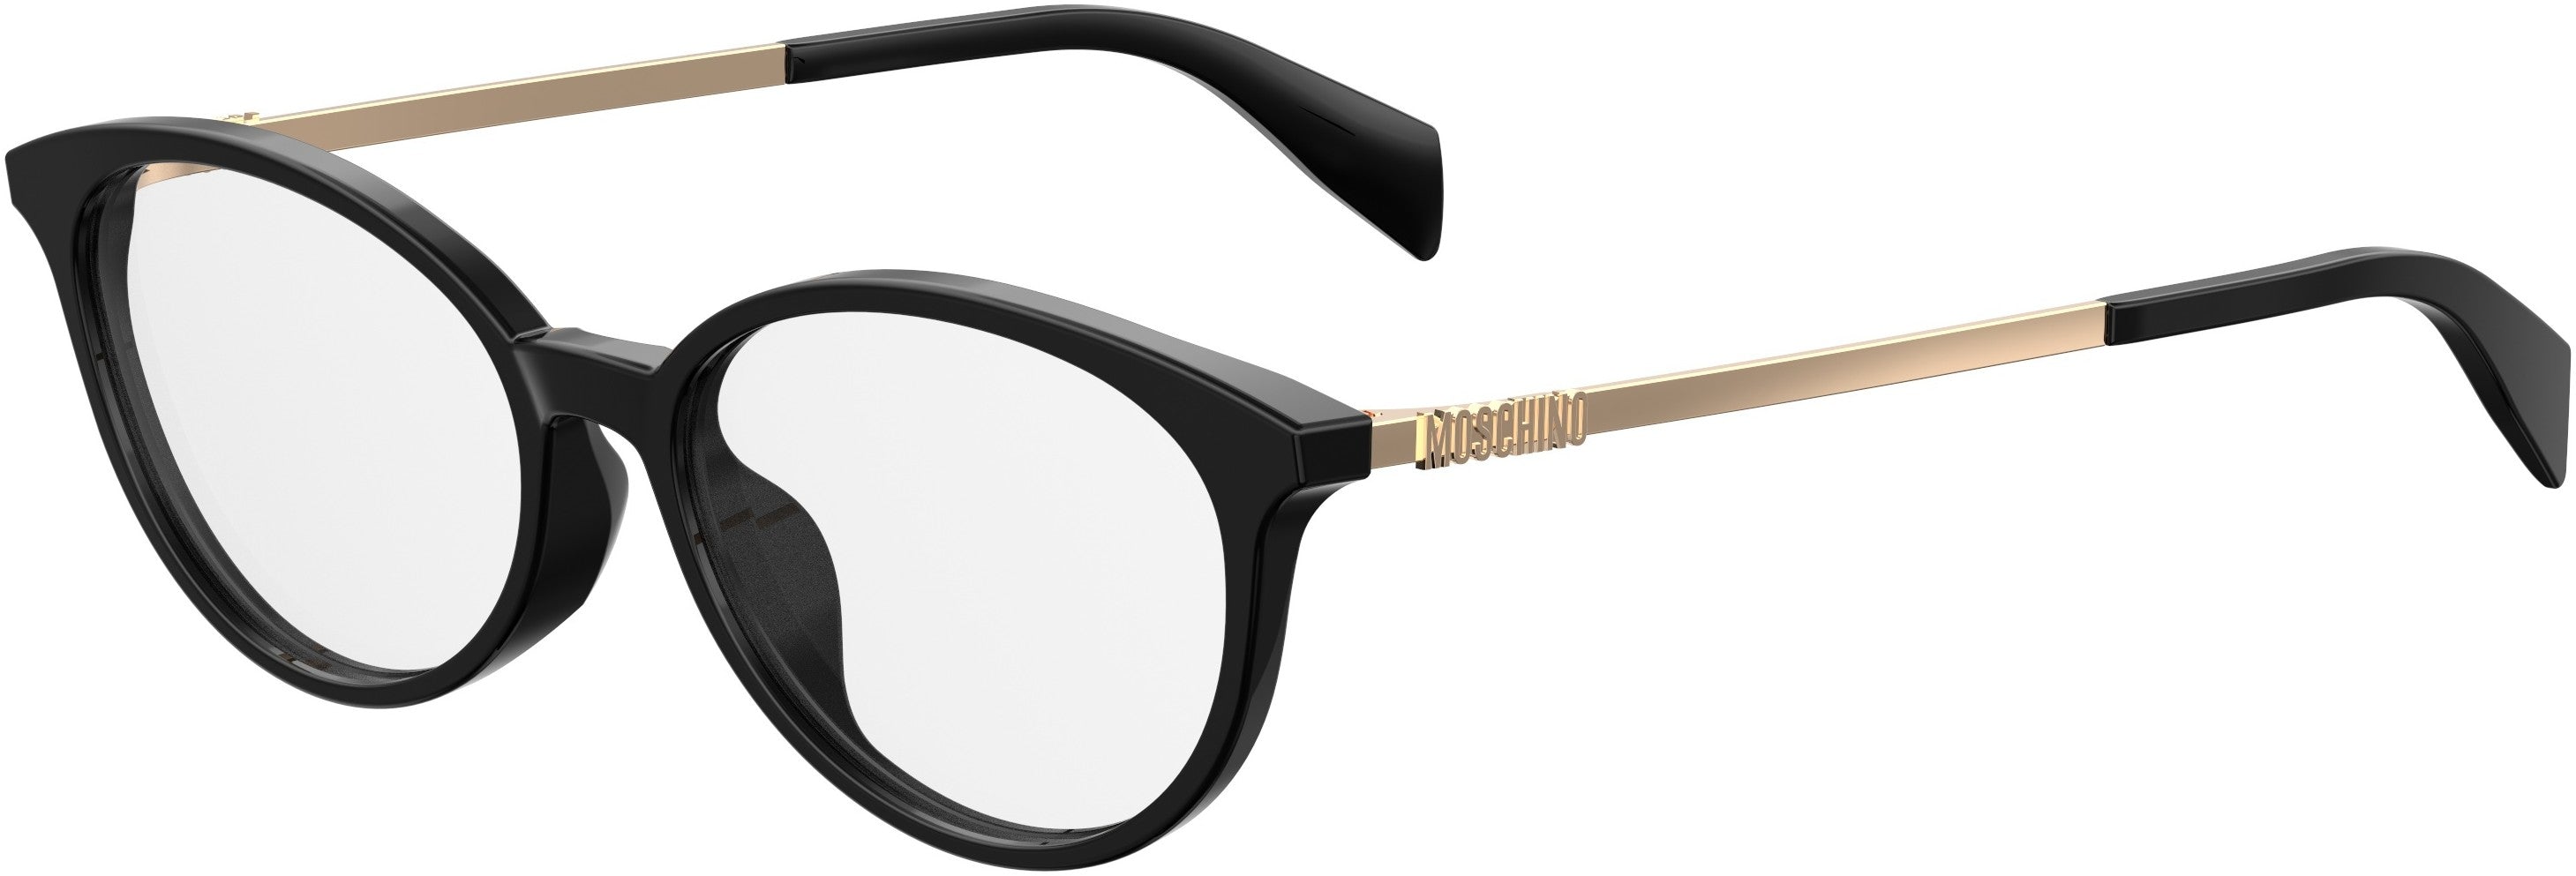  Moschino 526/F Oval Modified Eyeglasses 0807-0807  Black (00 Demo Lens)